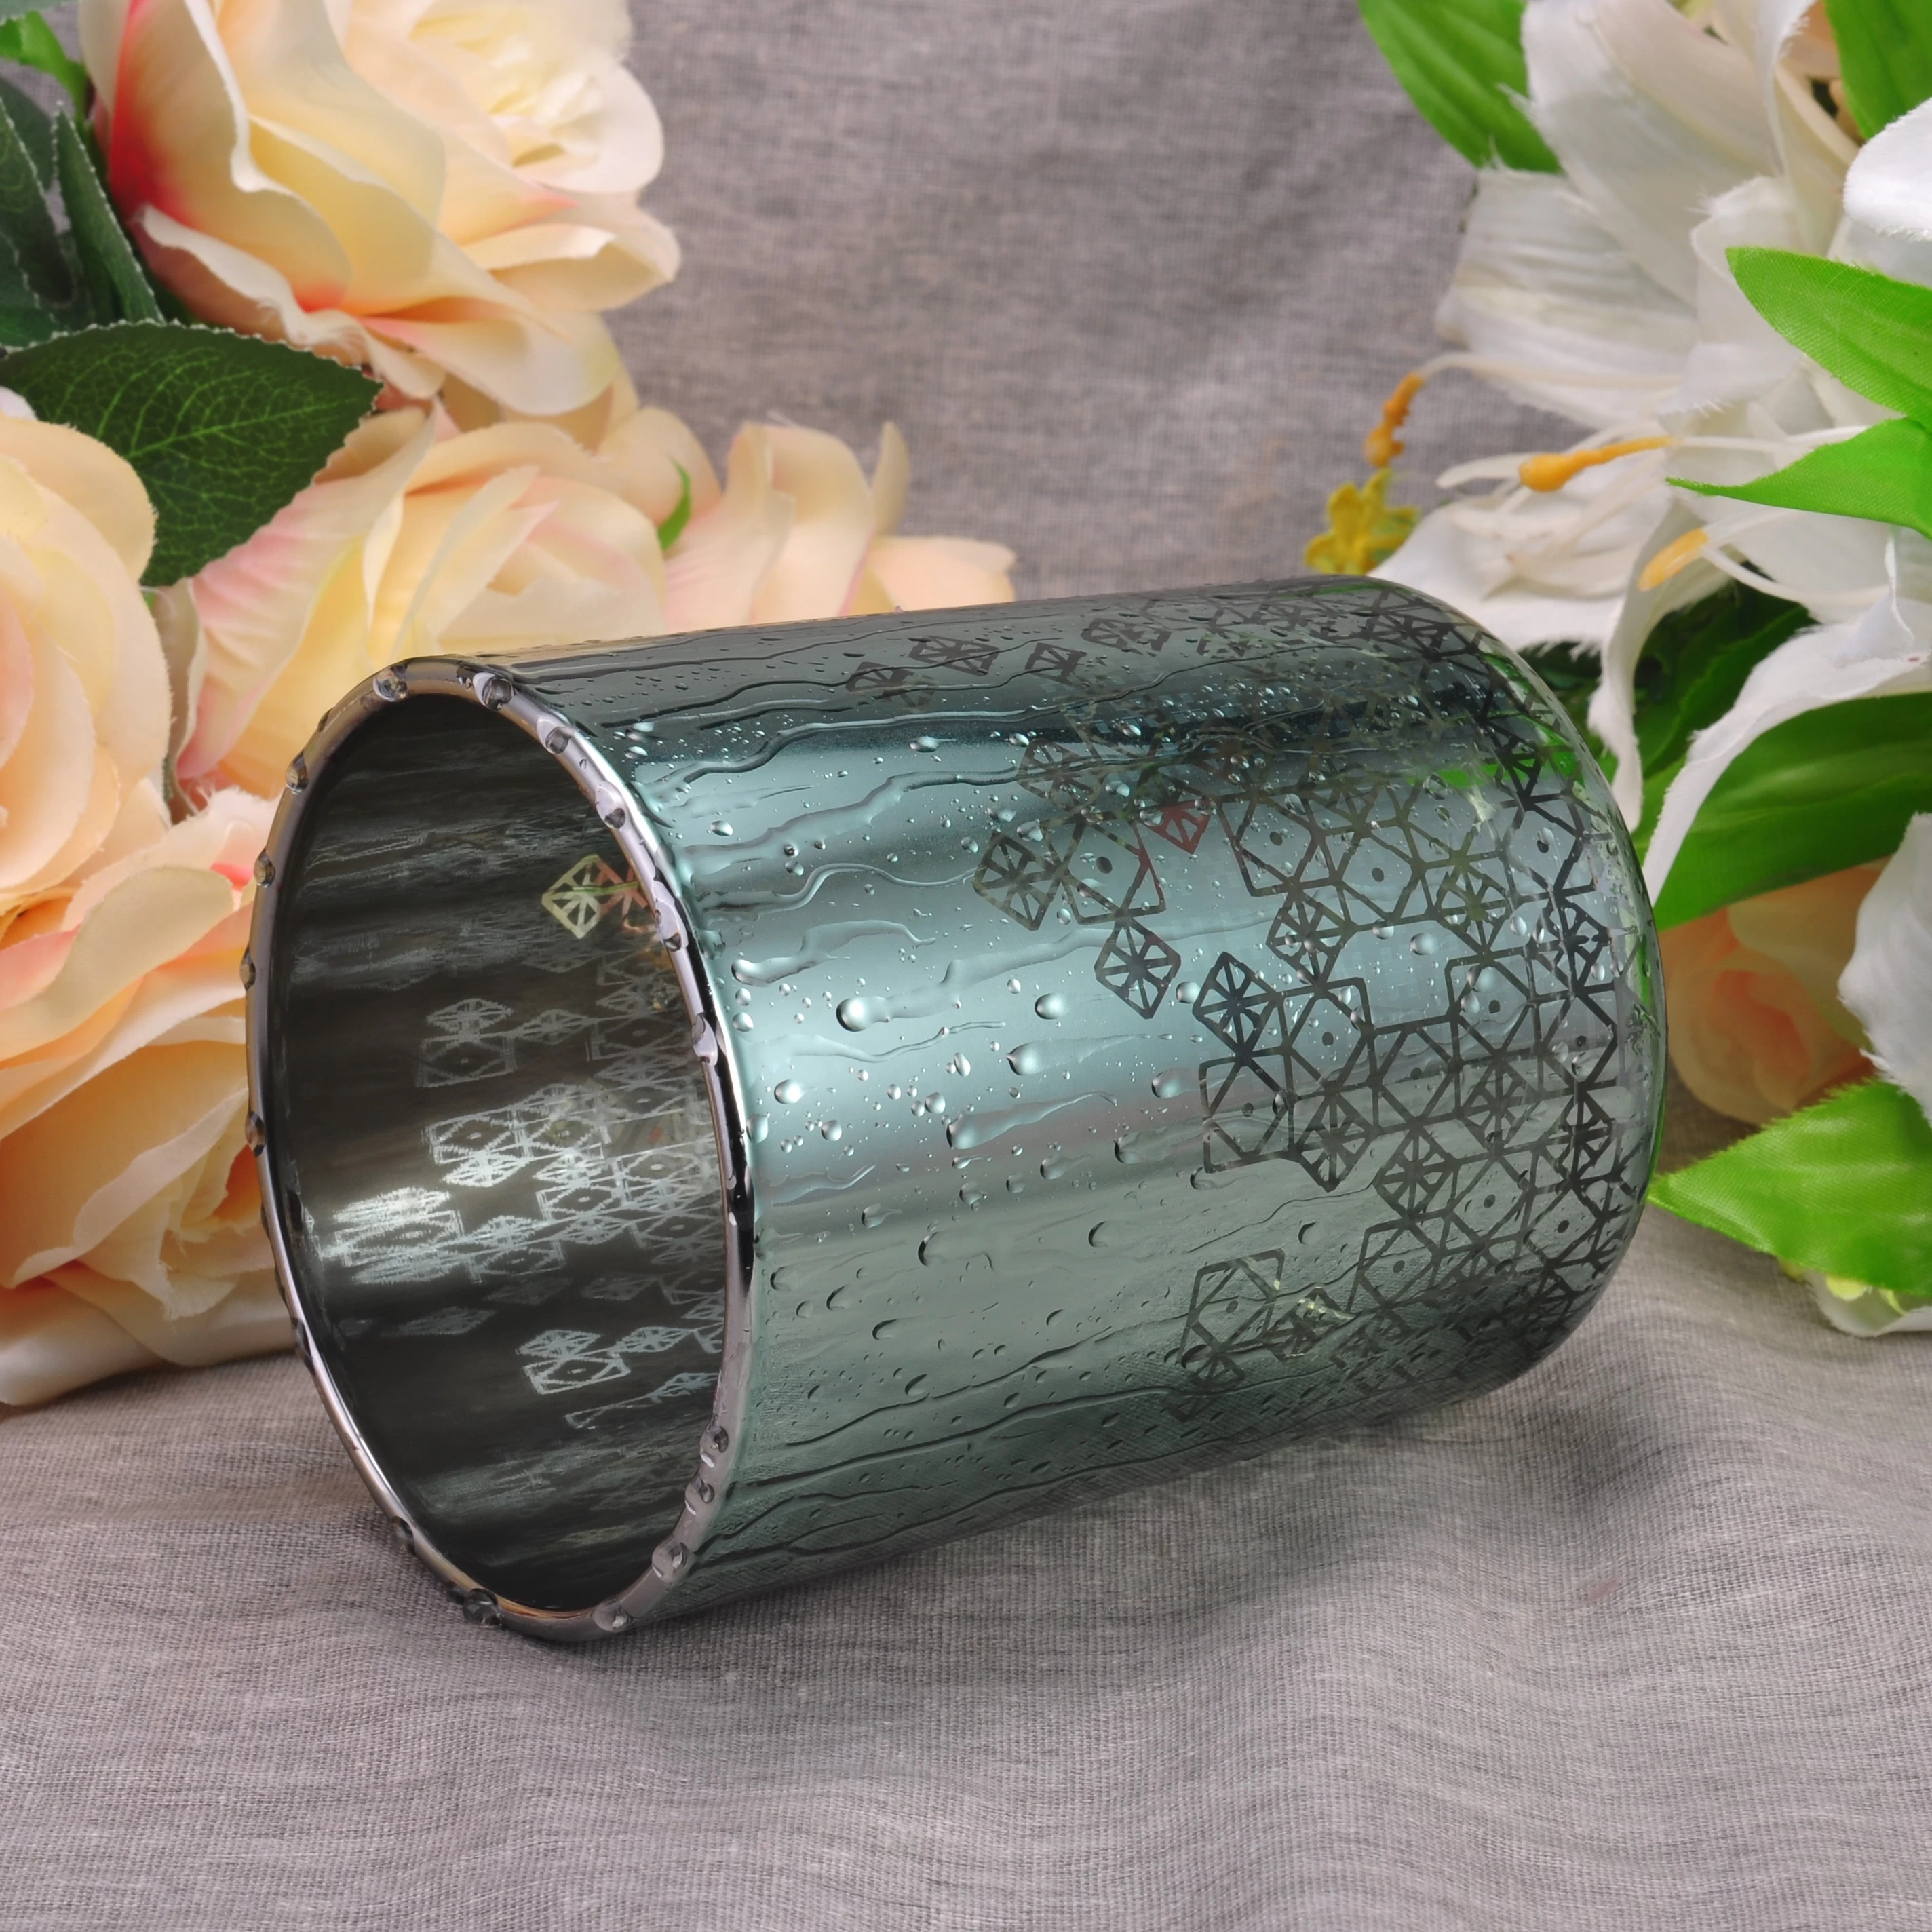 Sunny design luxury tea light glass candle vessel home decoration